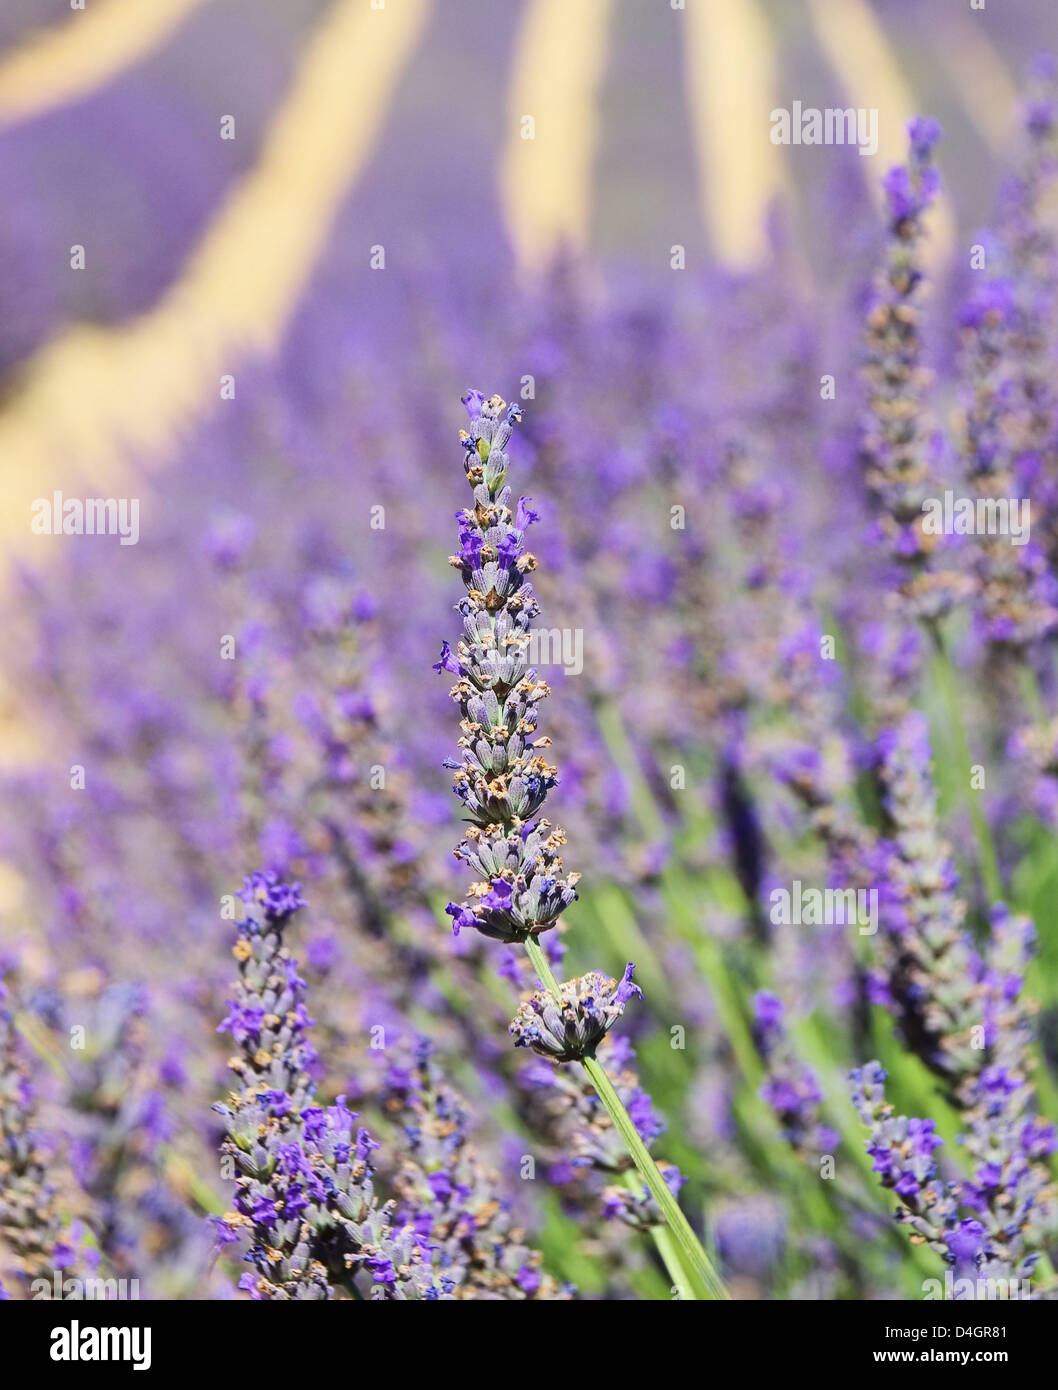 Lavendelfeld - lavender field 89 Stock Photo